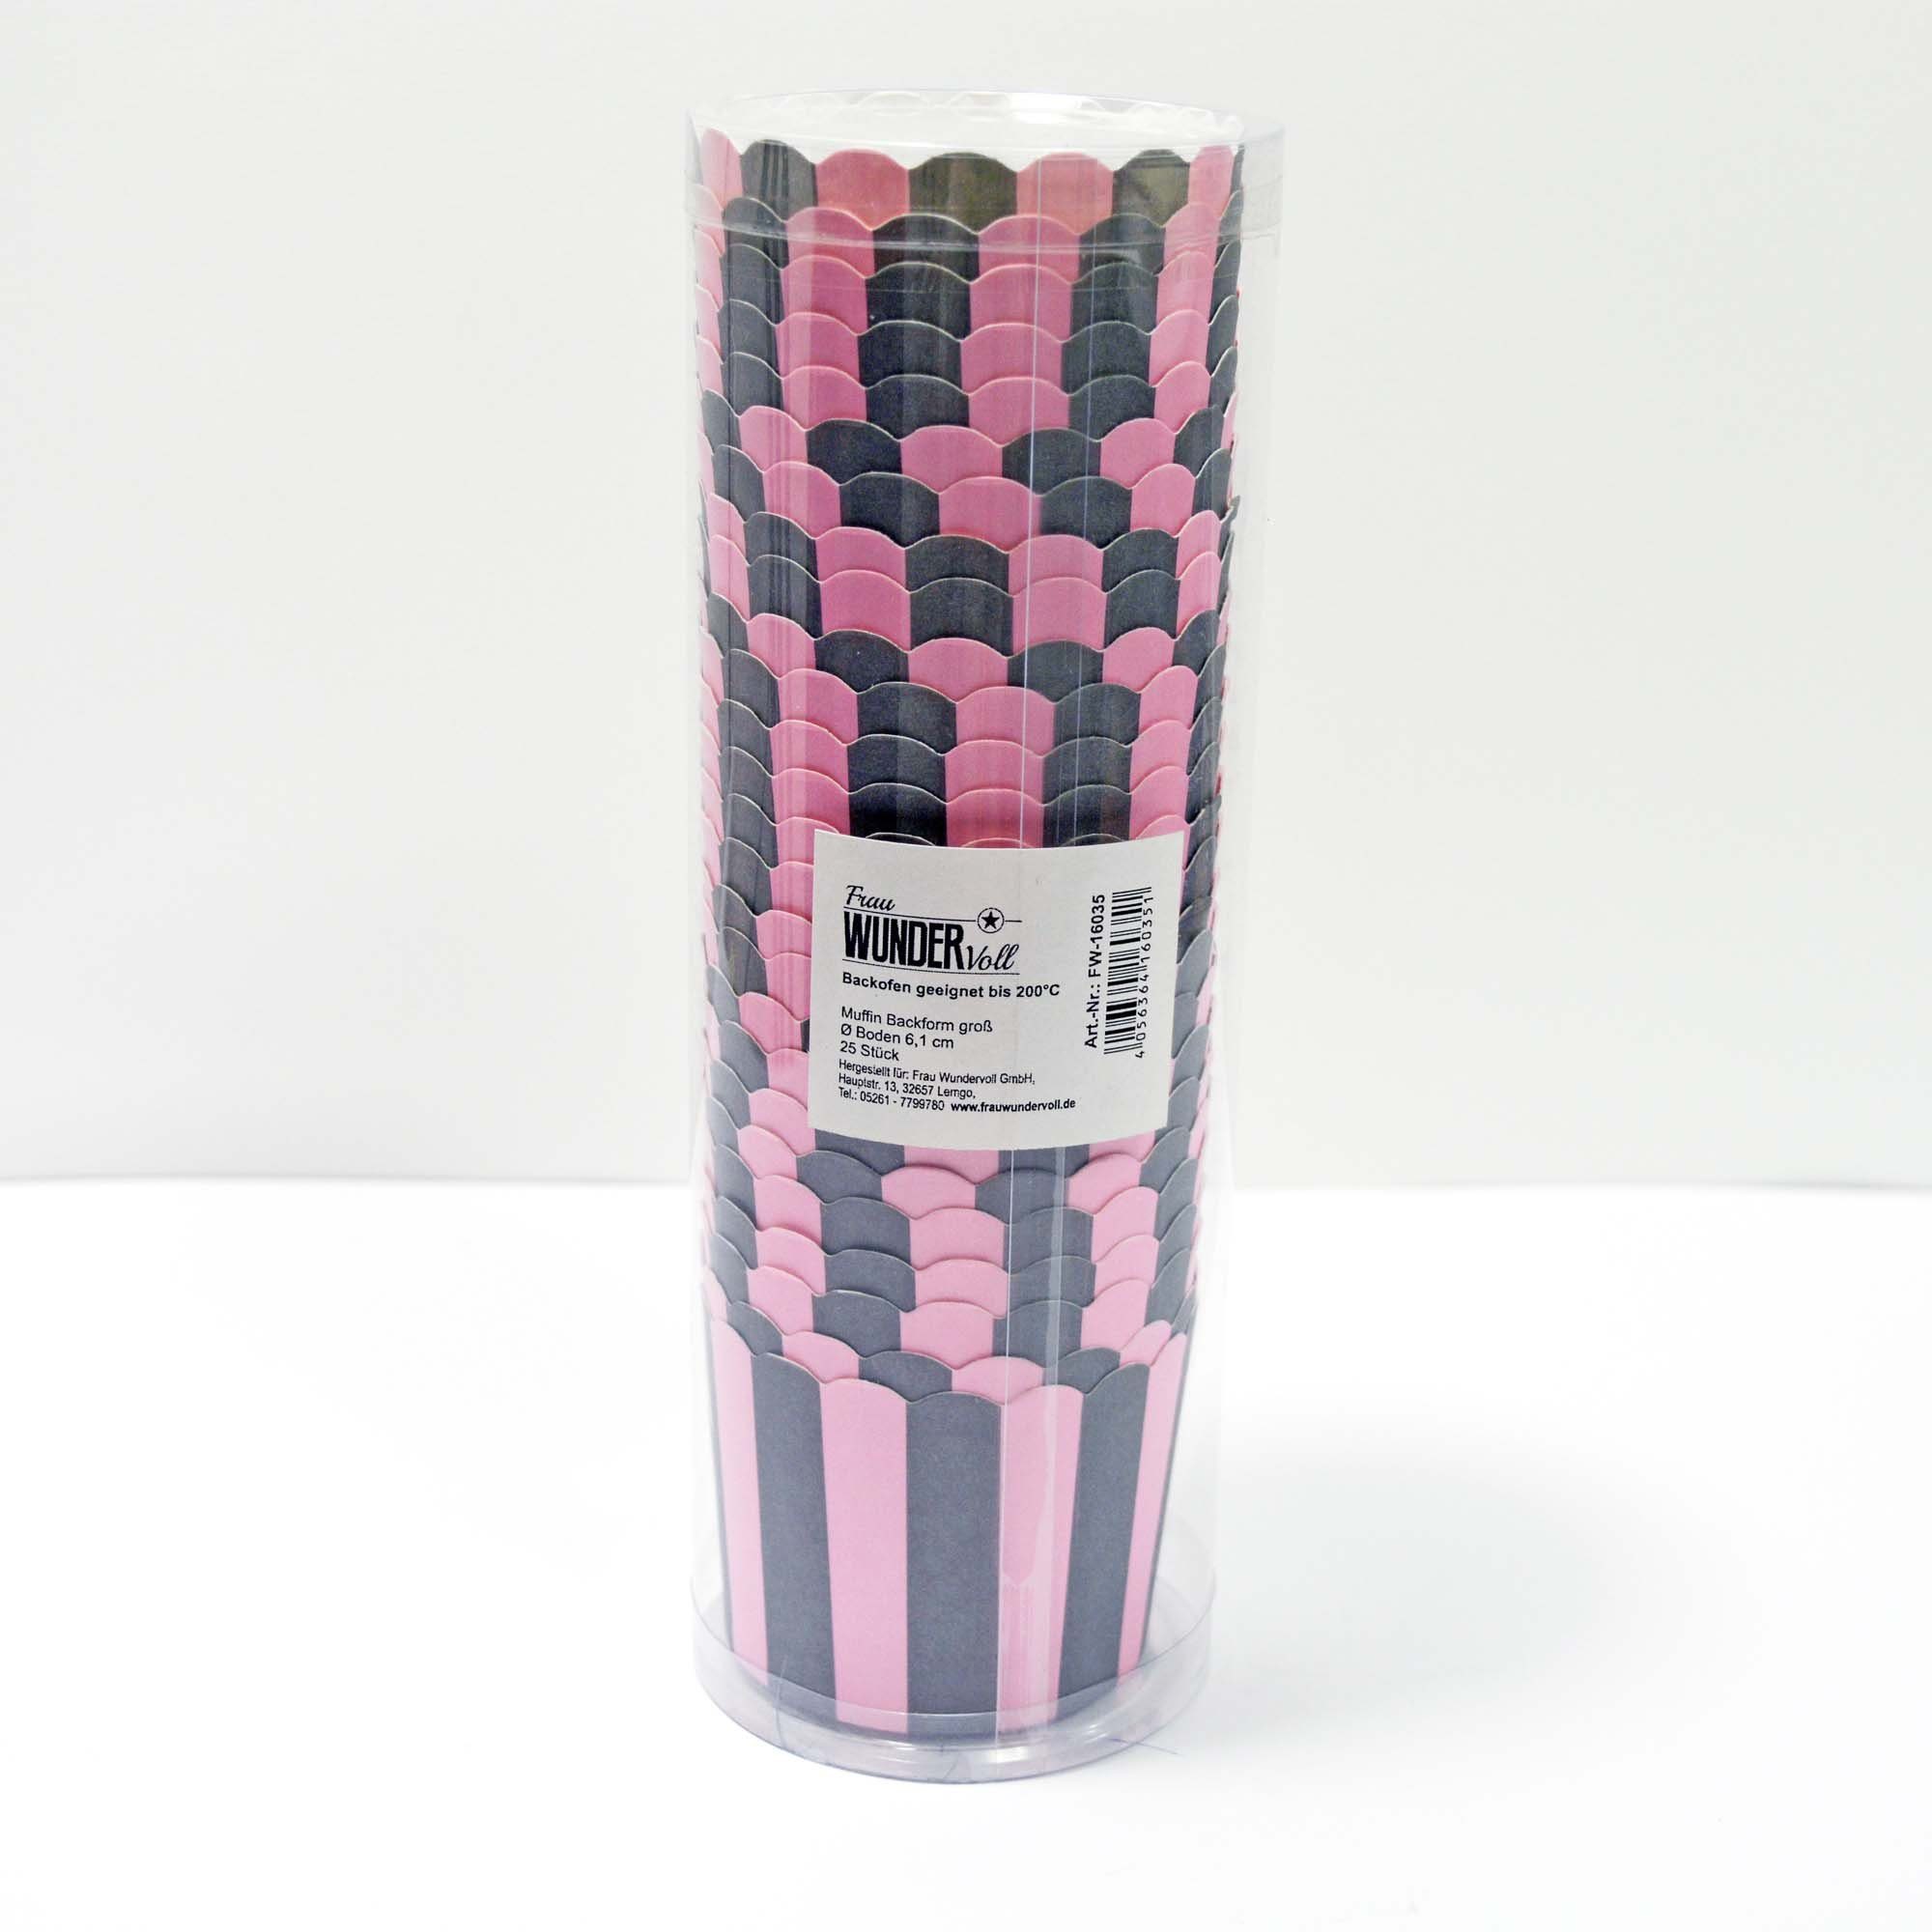 Frau WUNDERVoll Muffinform 6,1 groß Durchmesser rosa-graue Backformenk, Streifen, Muffin (25-tlg) cm